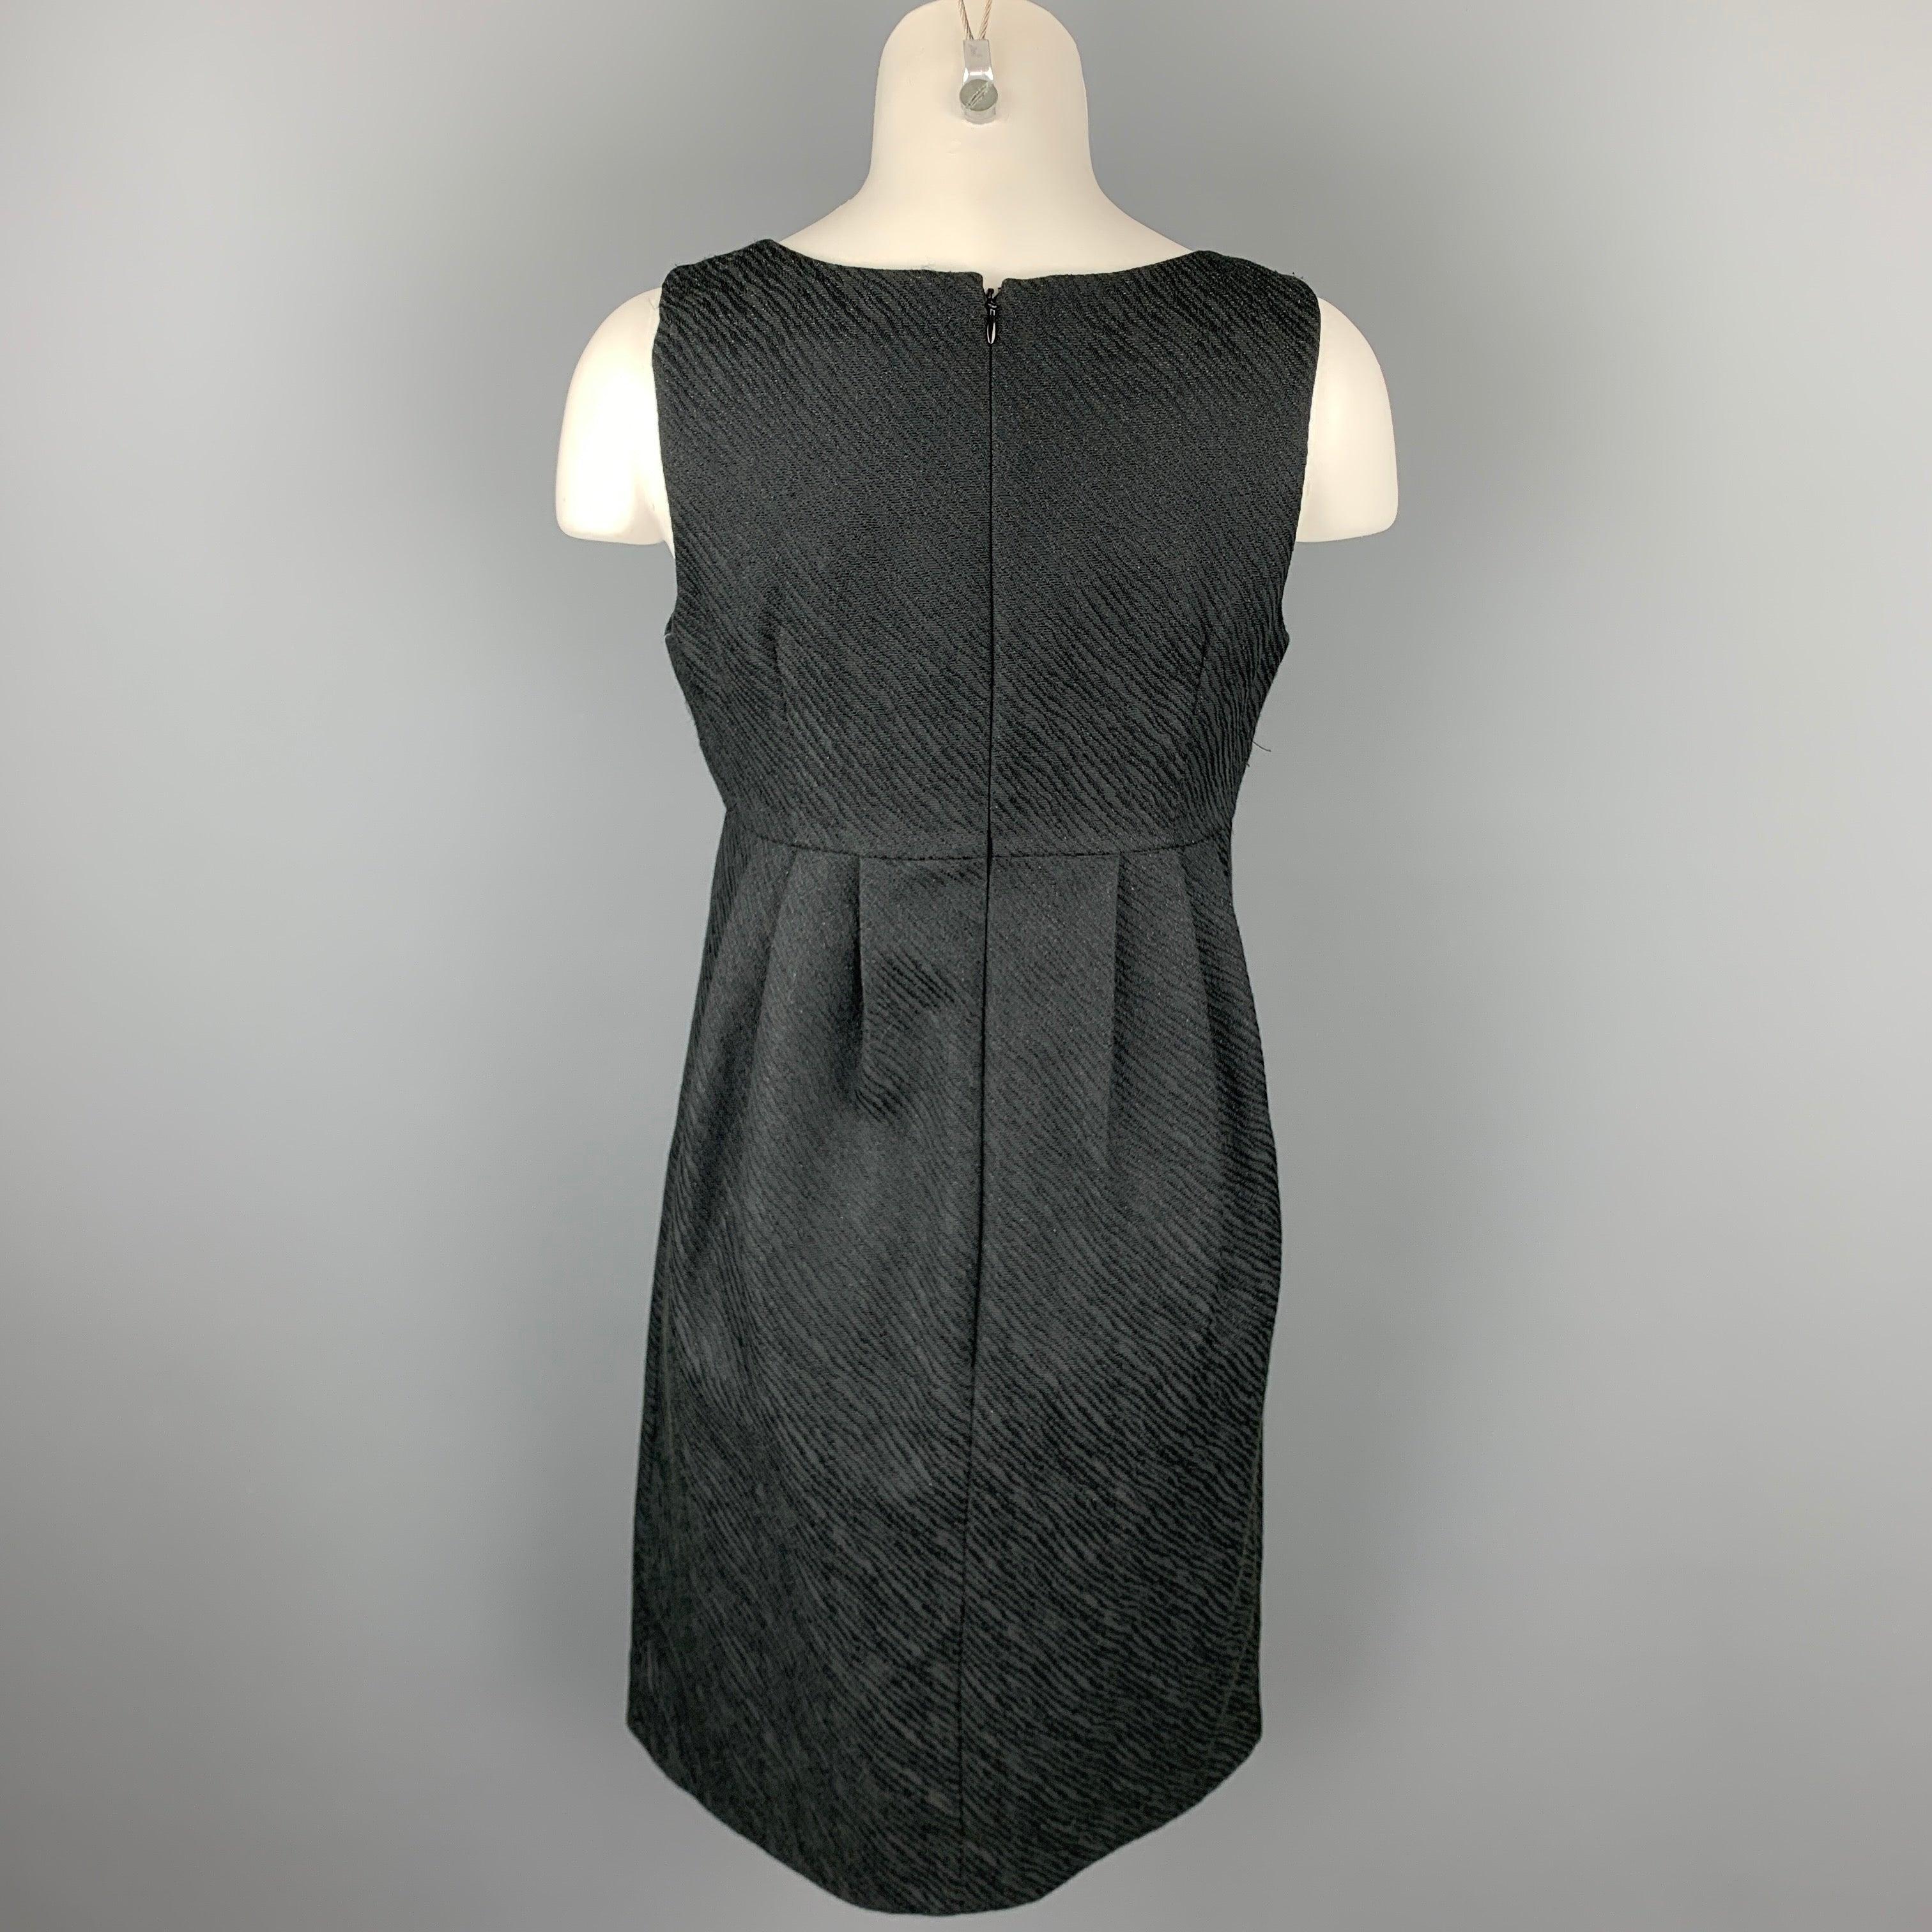 Women's MICHAEL KORS Size 4 Black Woven Polyester Blend Empire Waist Dress For Sale